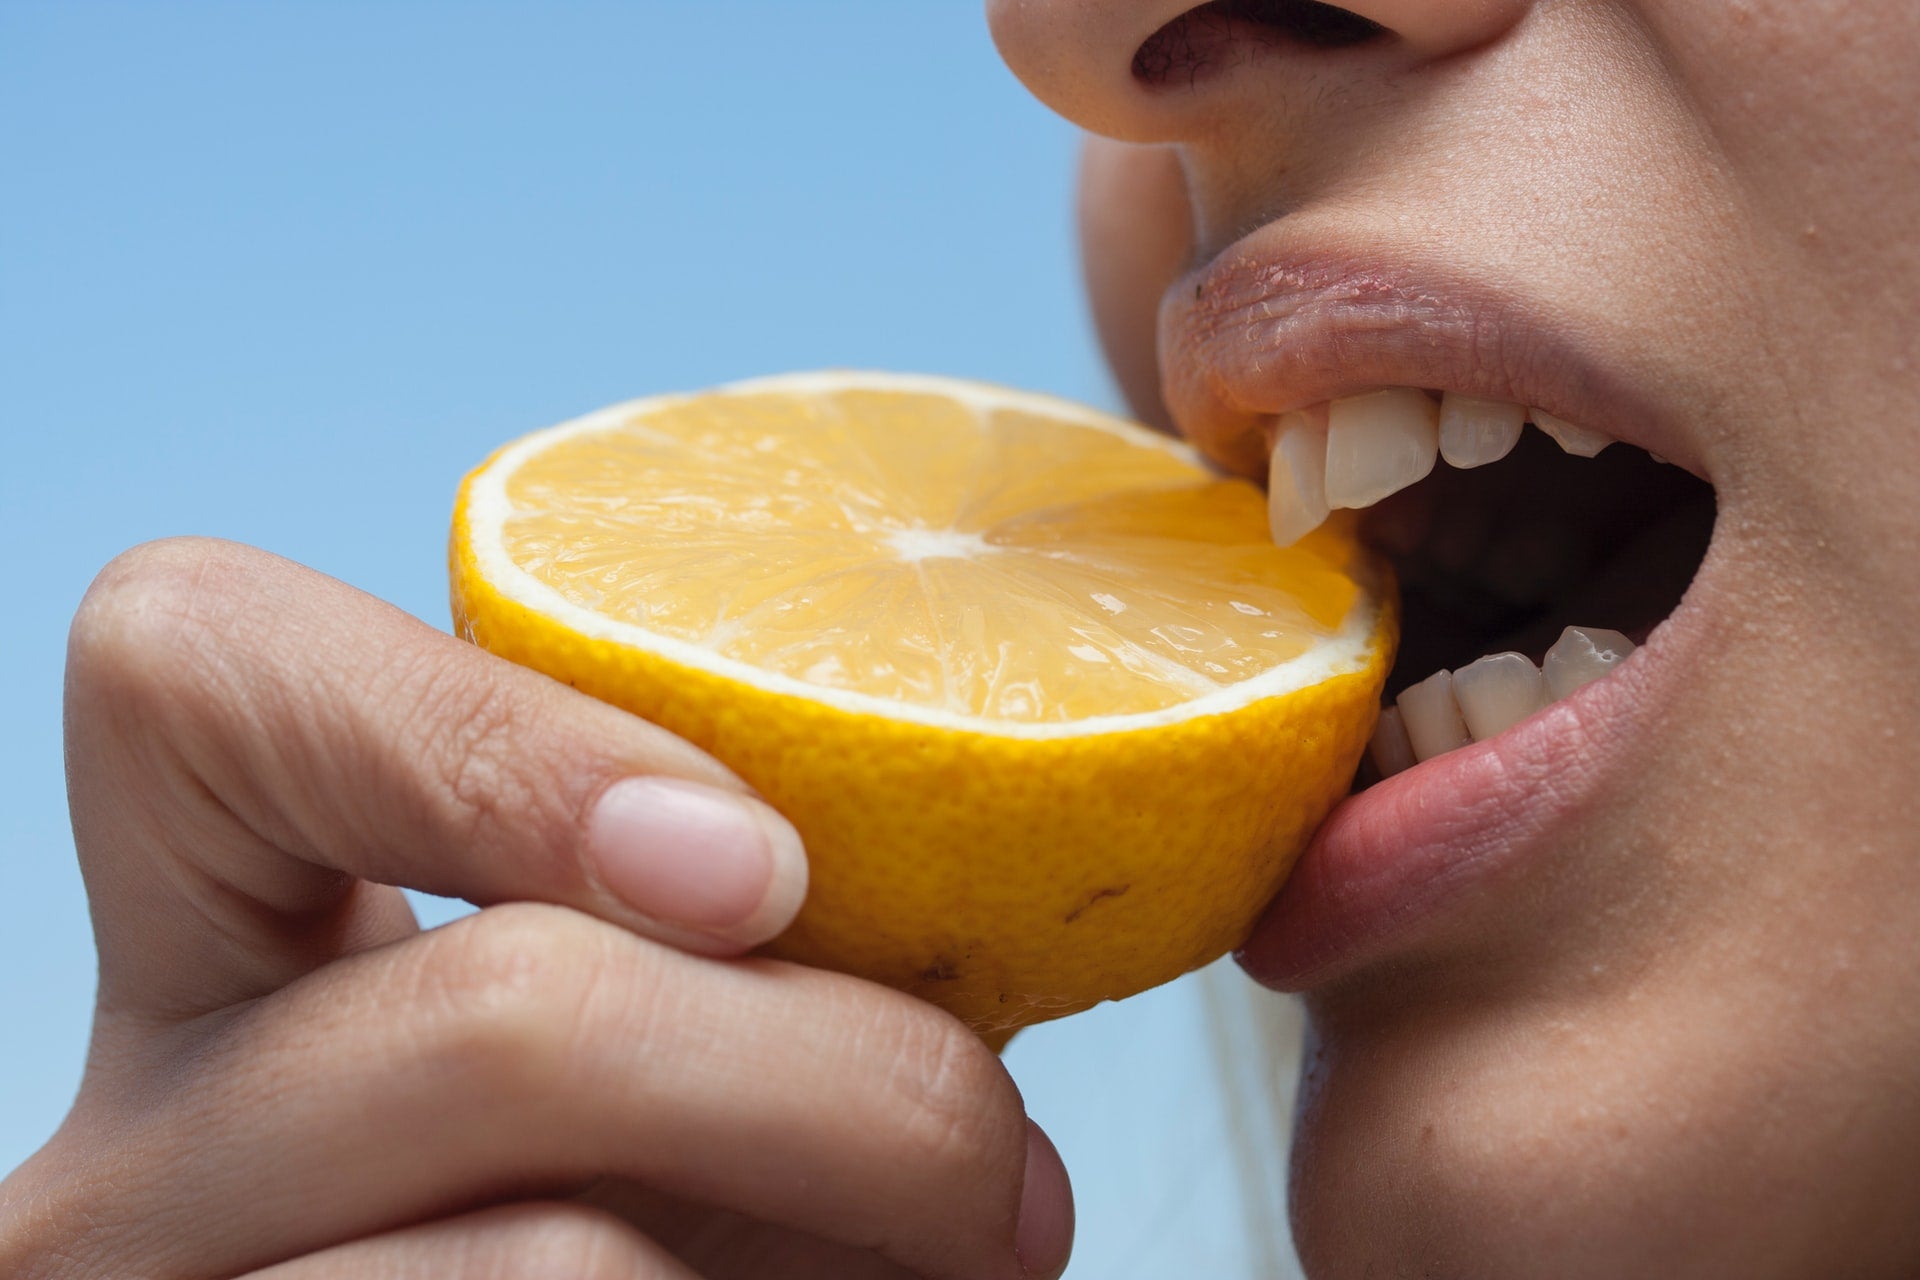 Eating habits that make teeth yellow